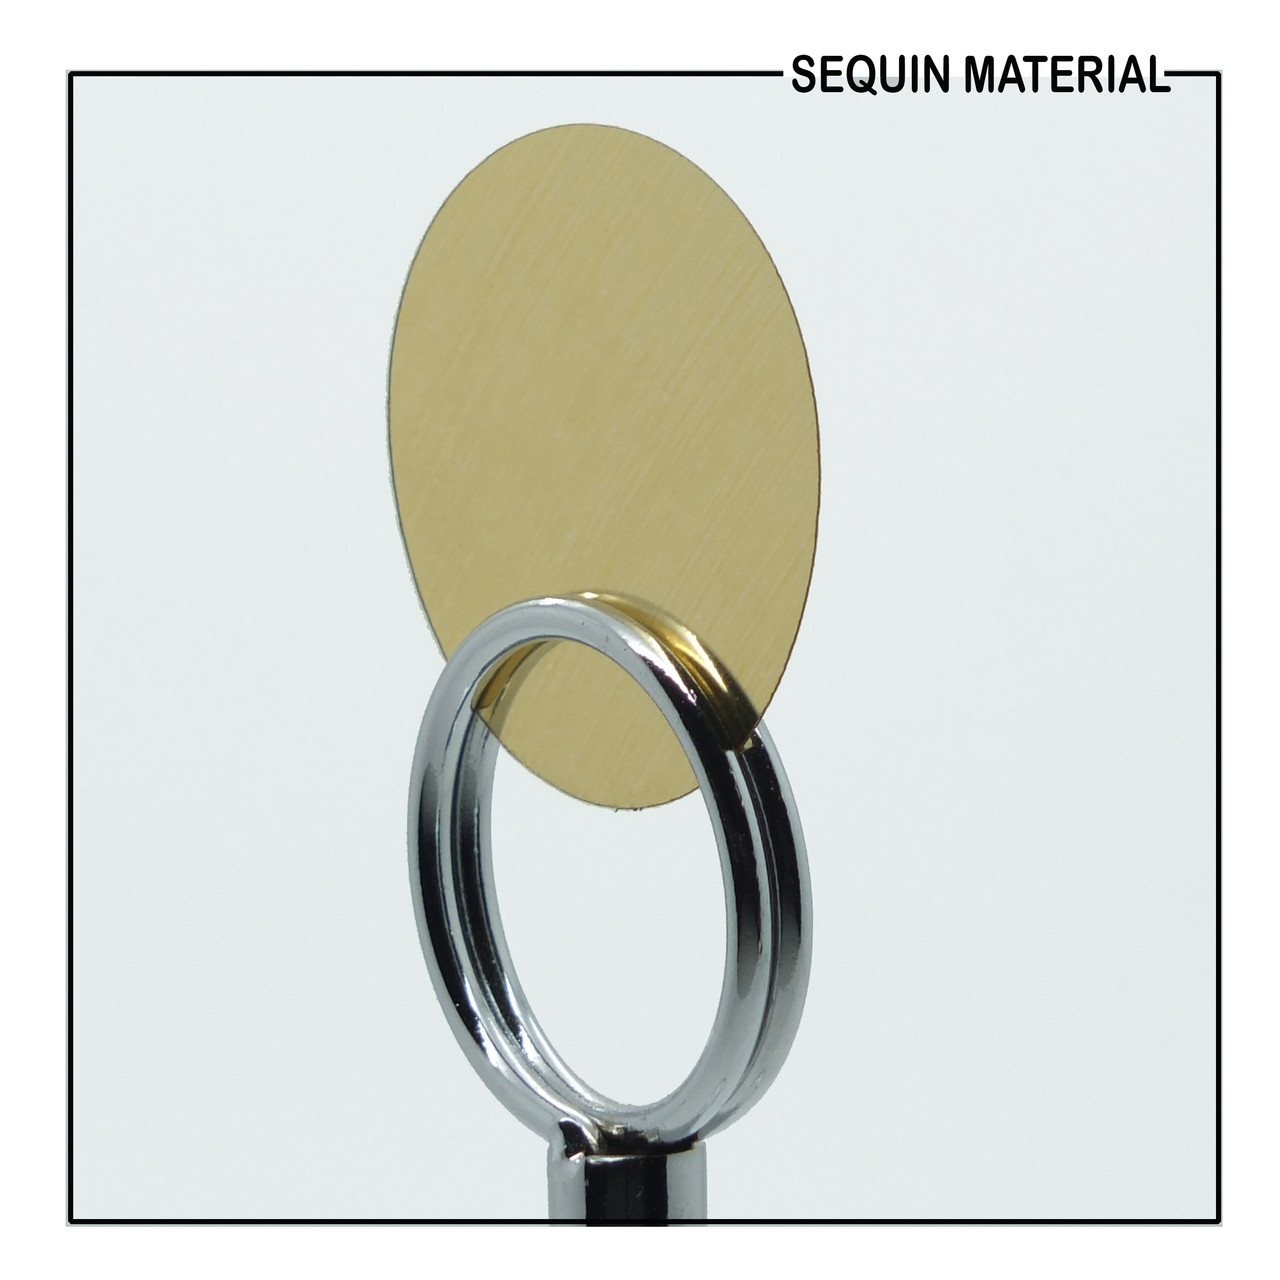 SequinsUSA Ethnic Woven Fabric Weave Multicolor Gold Metallic Print Sequin Material RL134